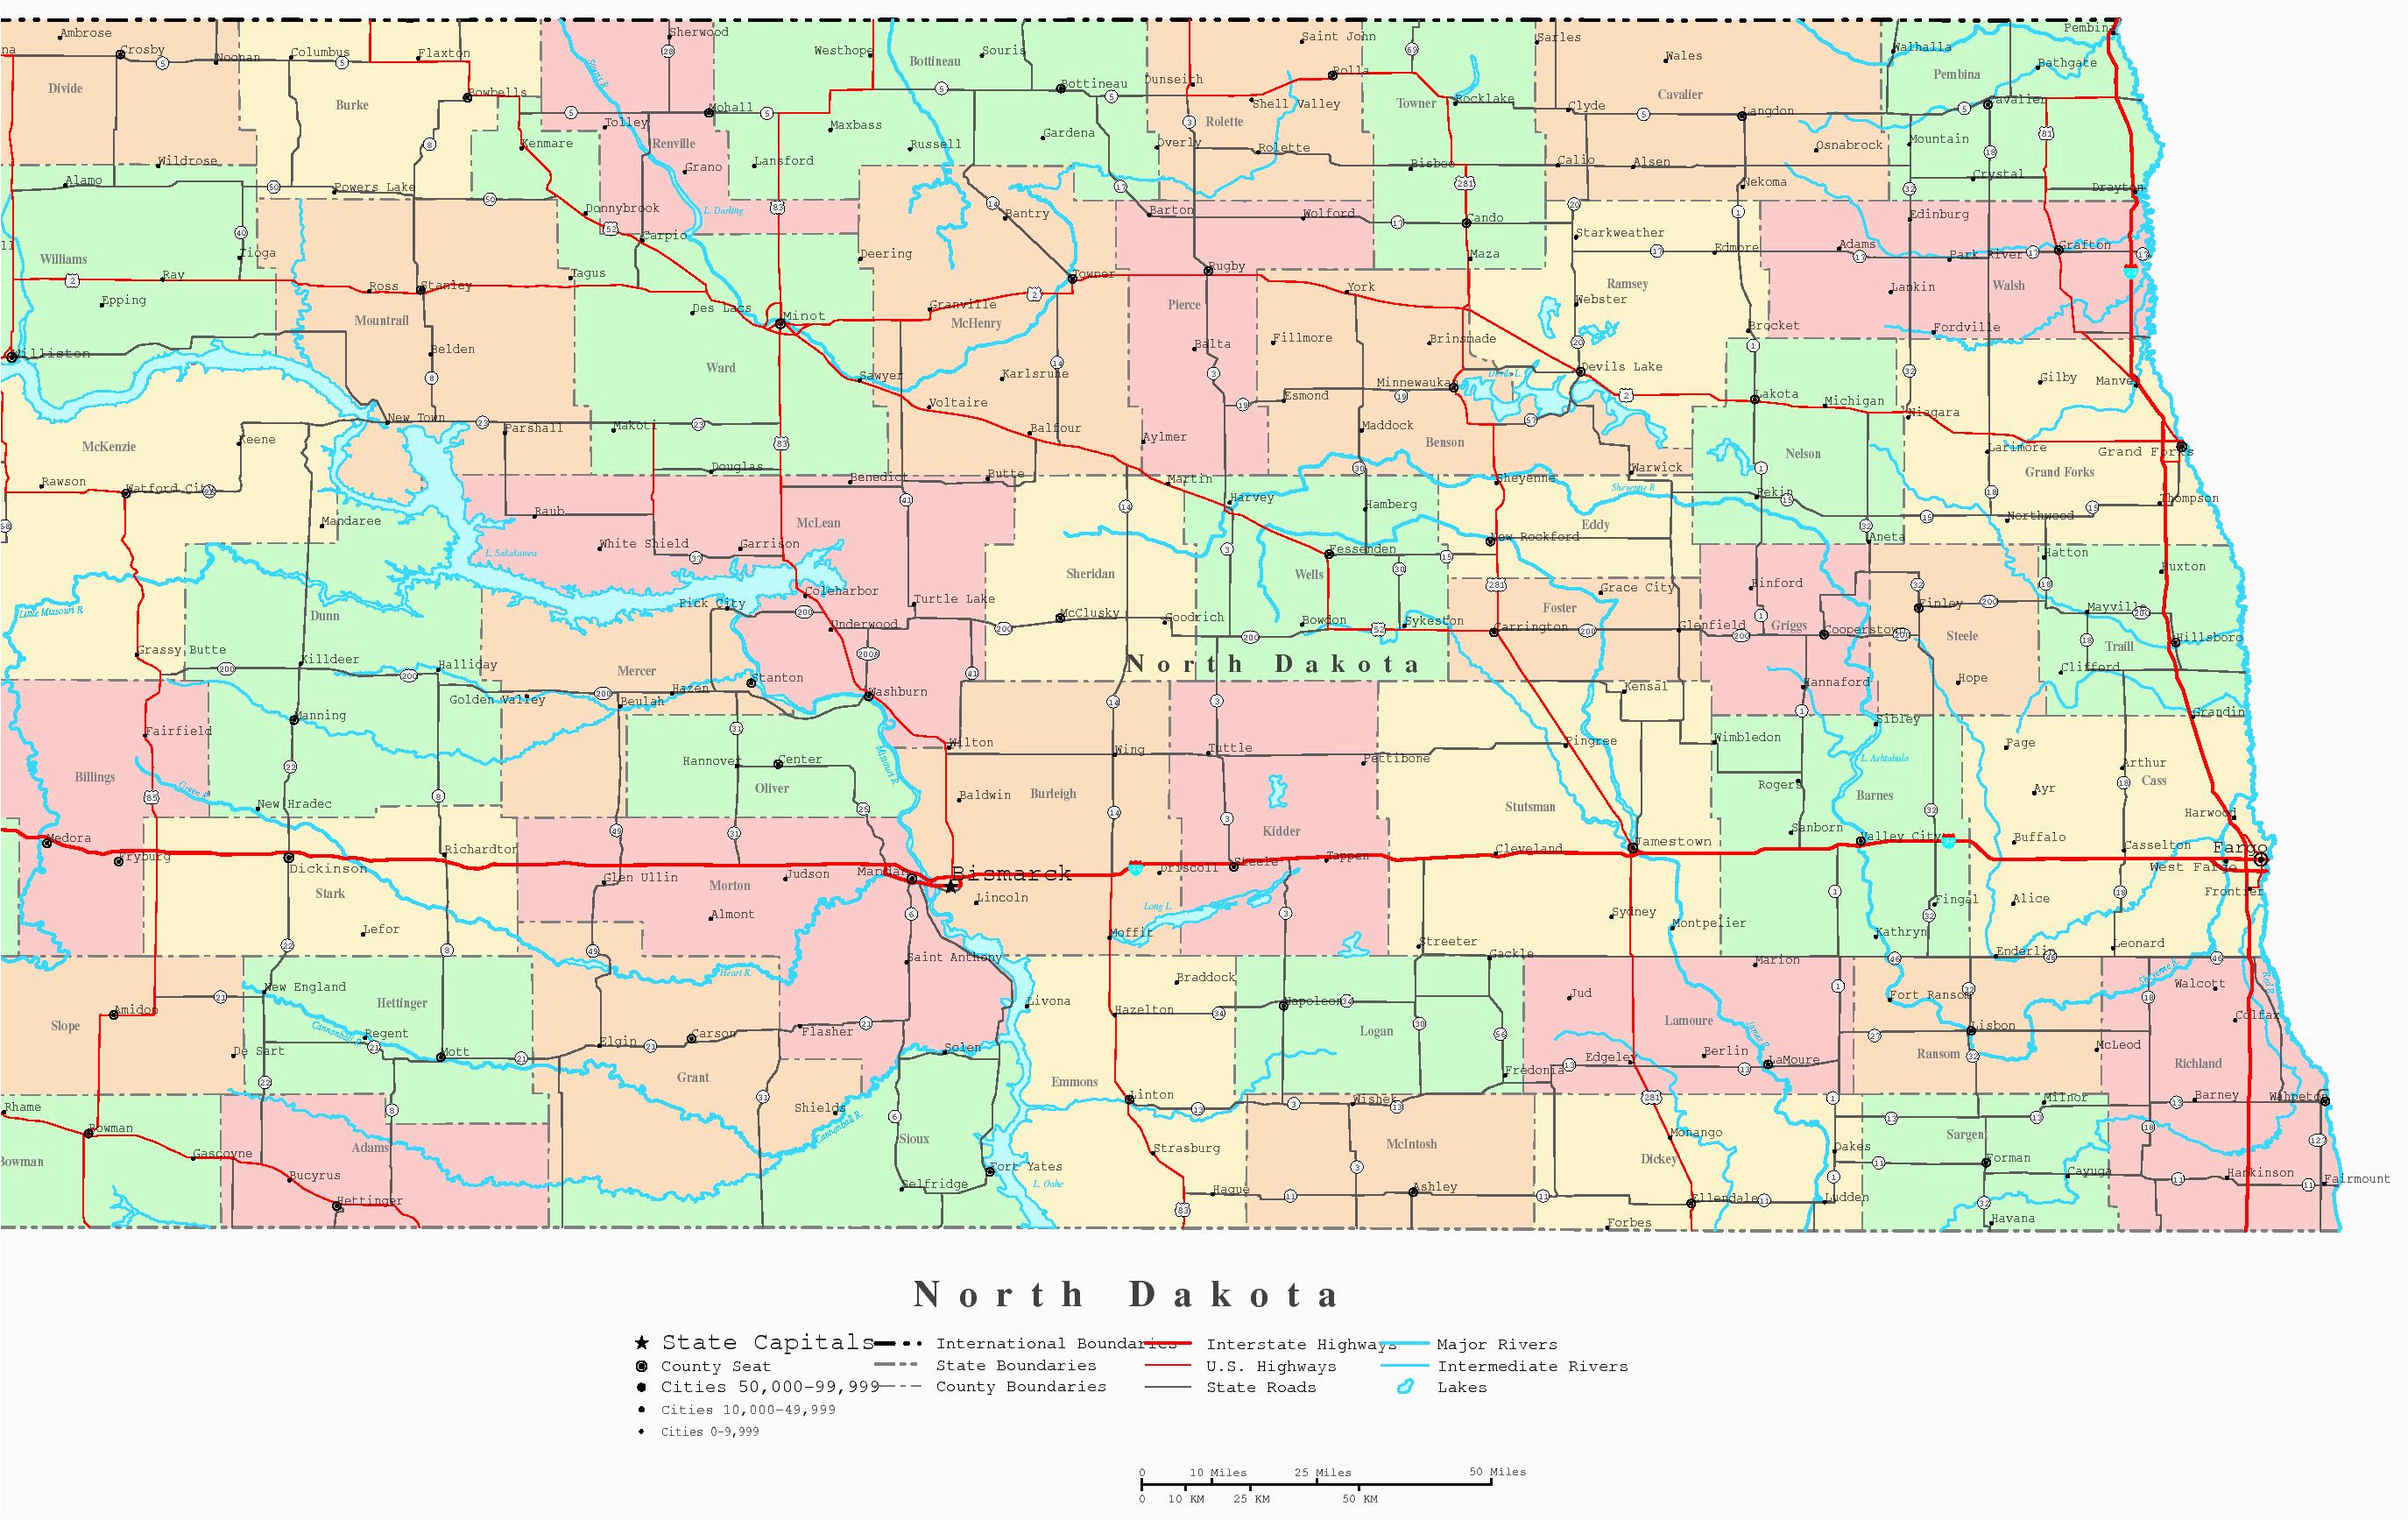 north dakota printable map 865 11 south of cities sitedesignco net